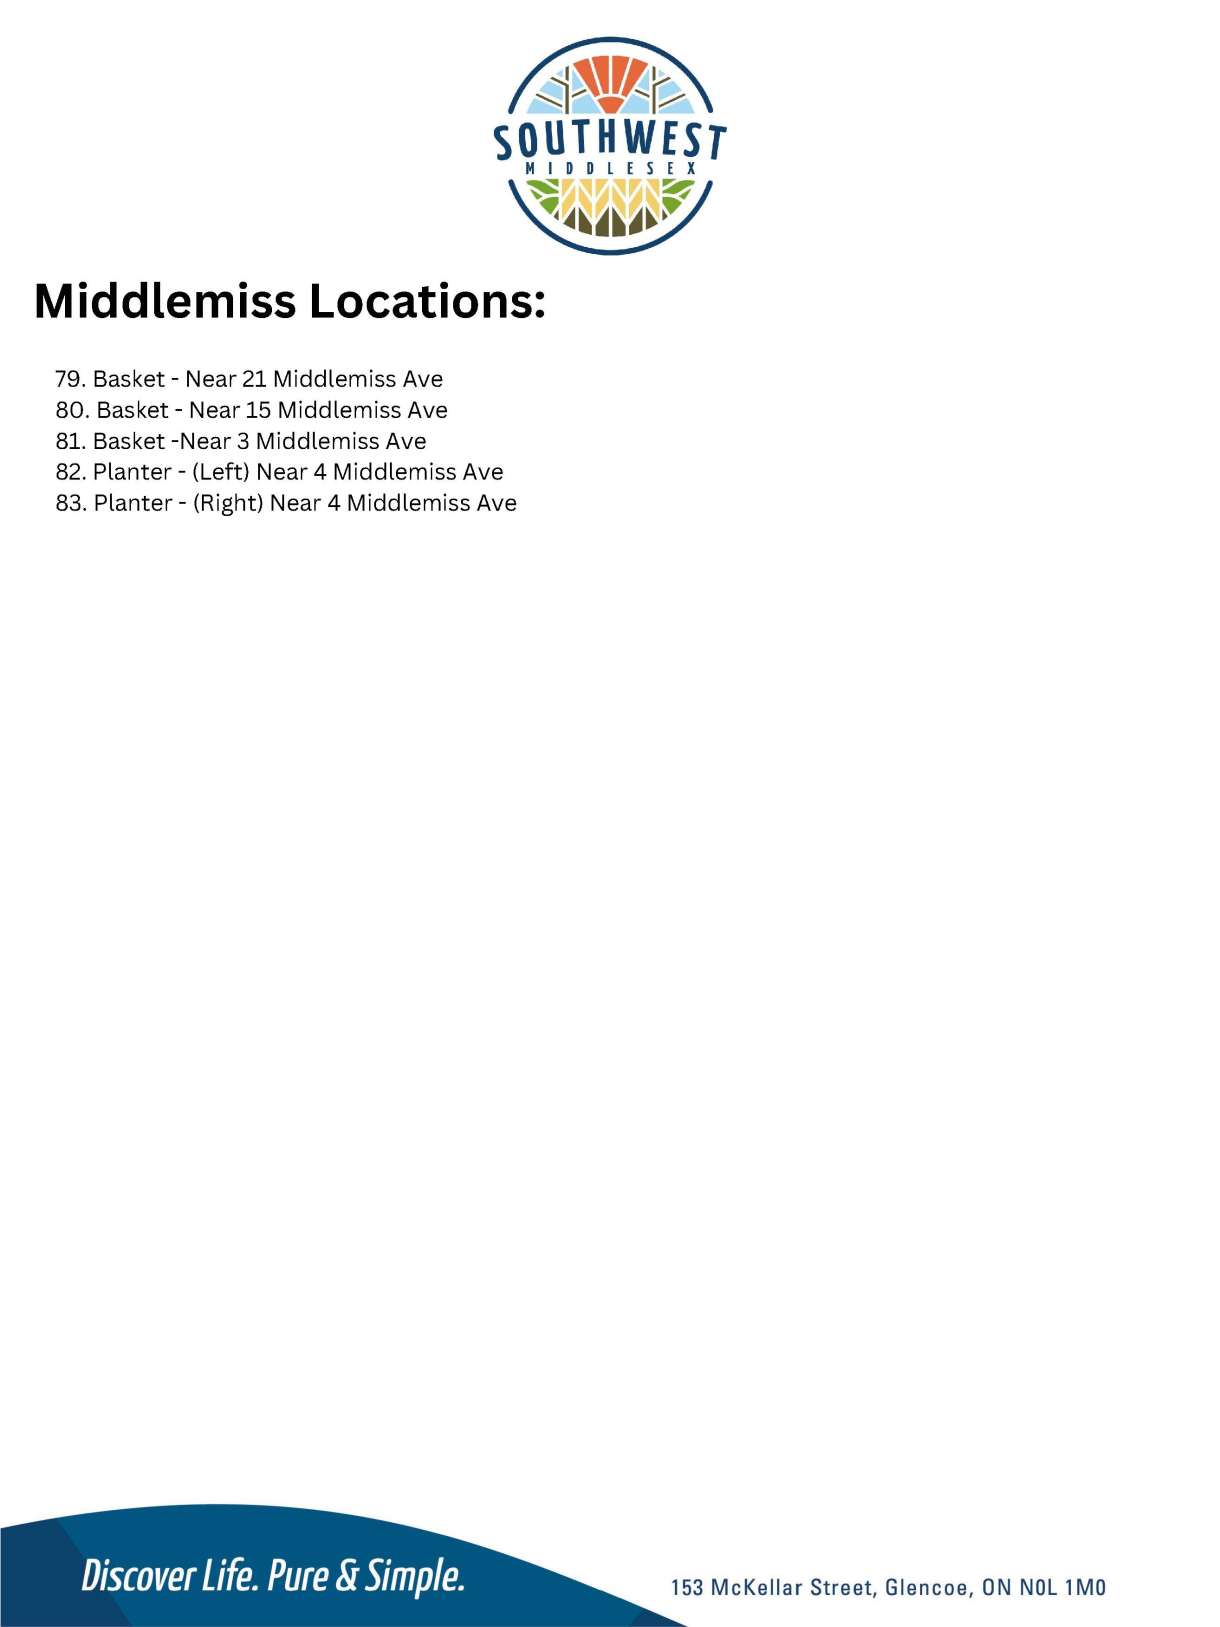 Middlemiss Flower Basket Locations